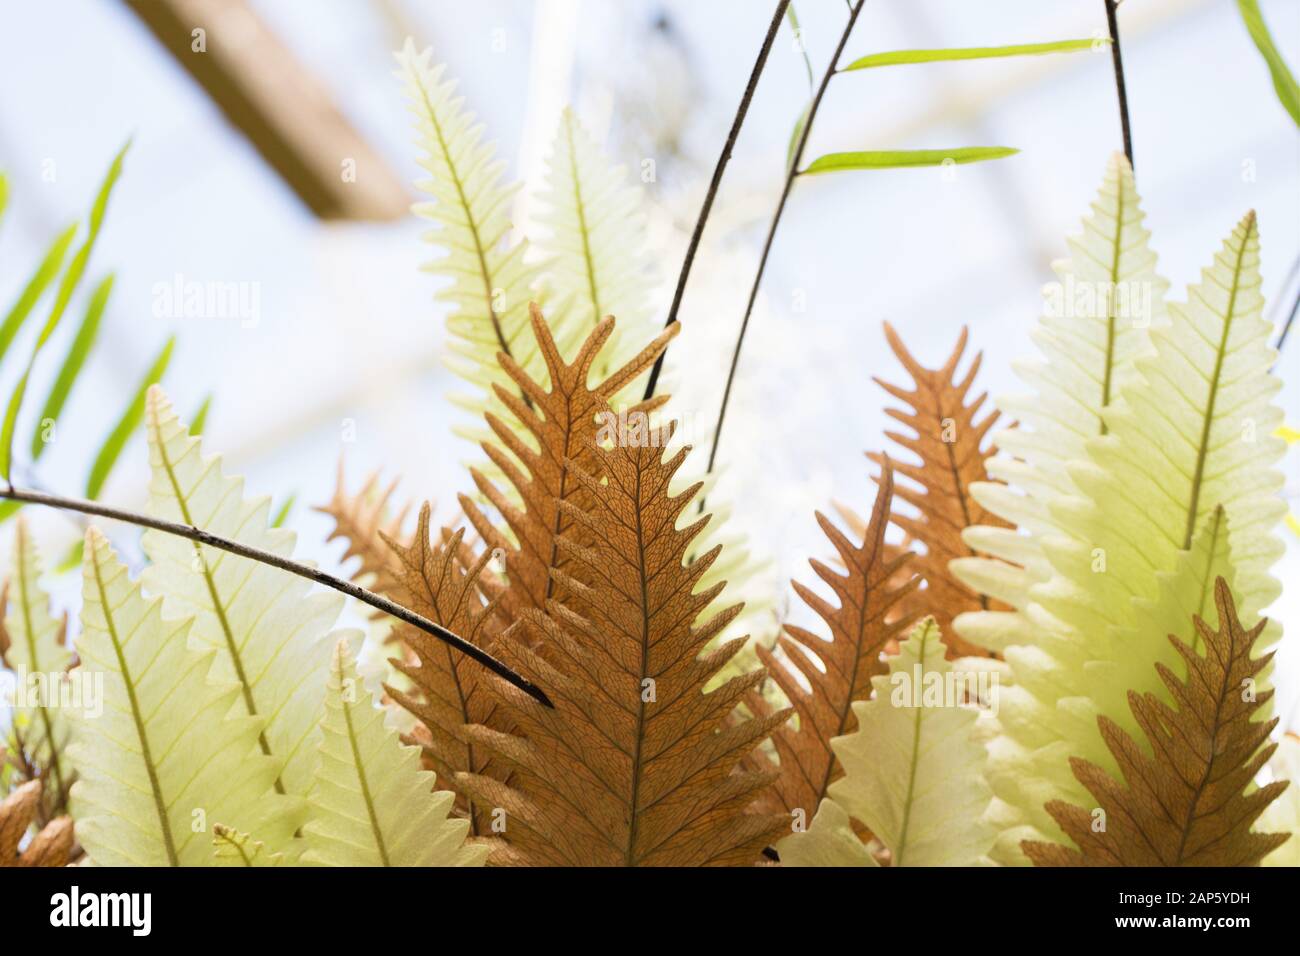 Drynaria rigidula fern in a hanging basket. Stock Photo